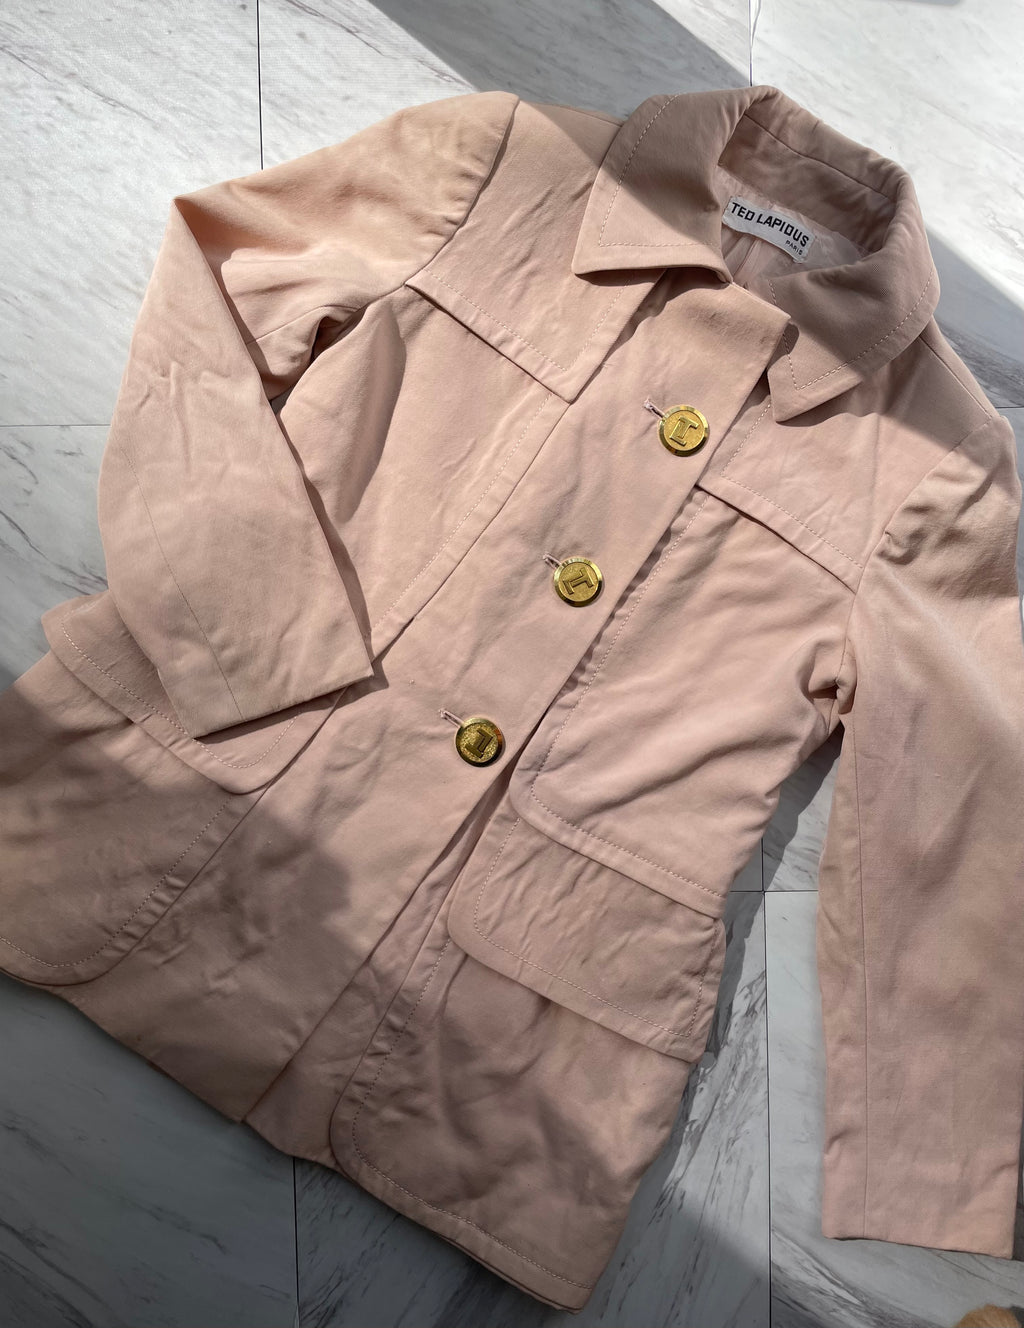 Vintage 60s Ted Lapidus jacket, Size S